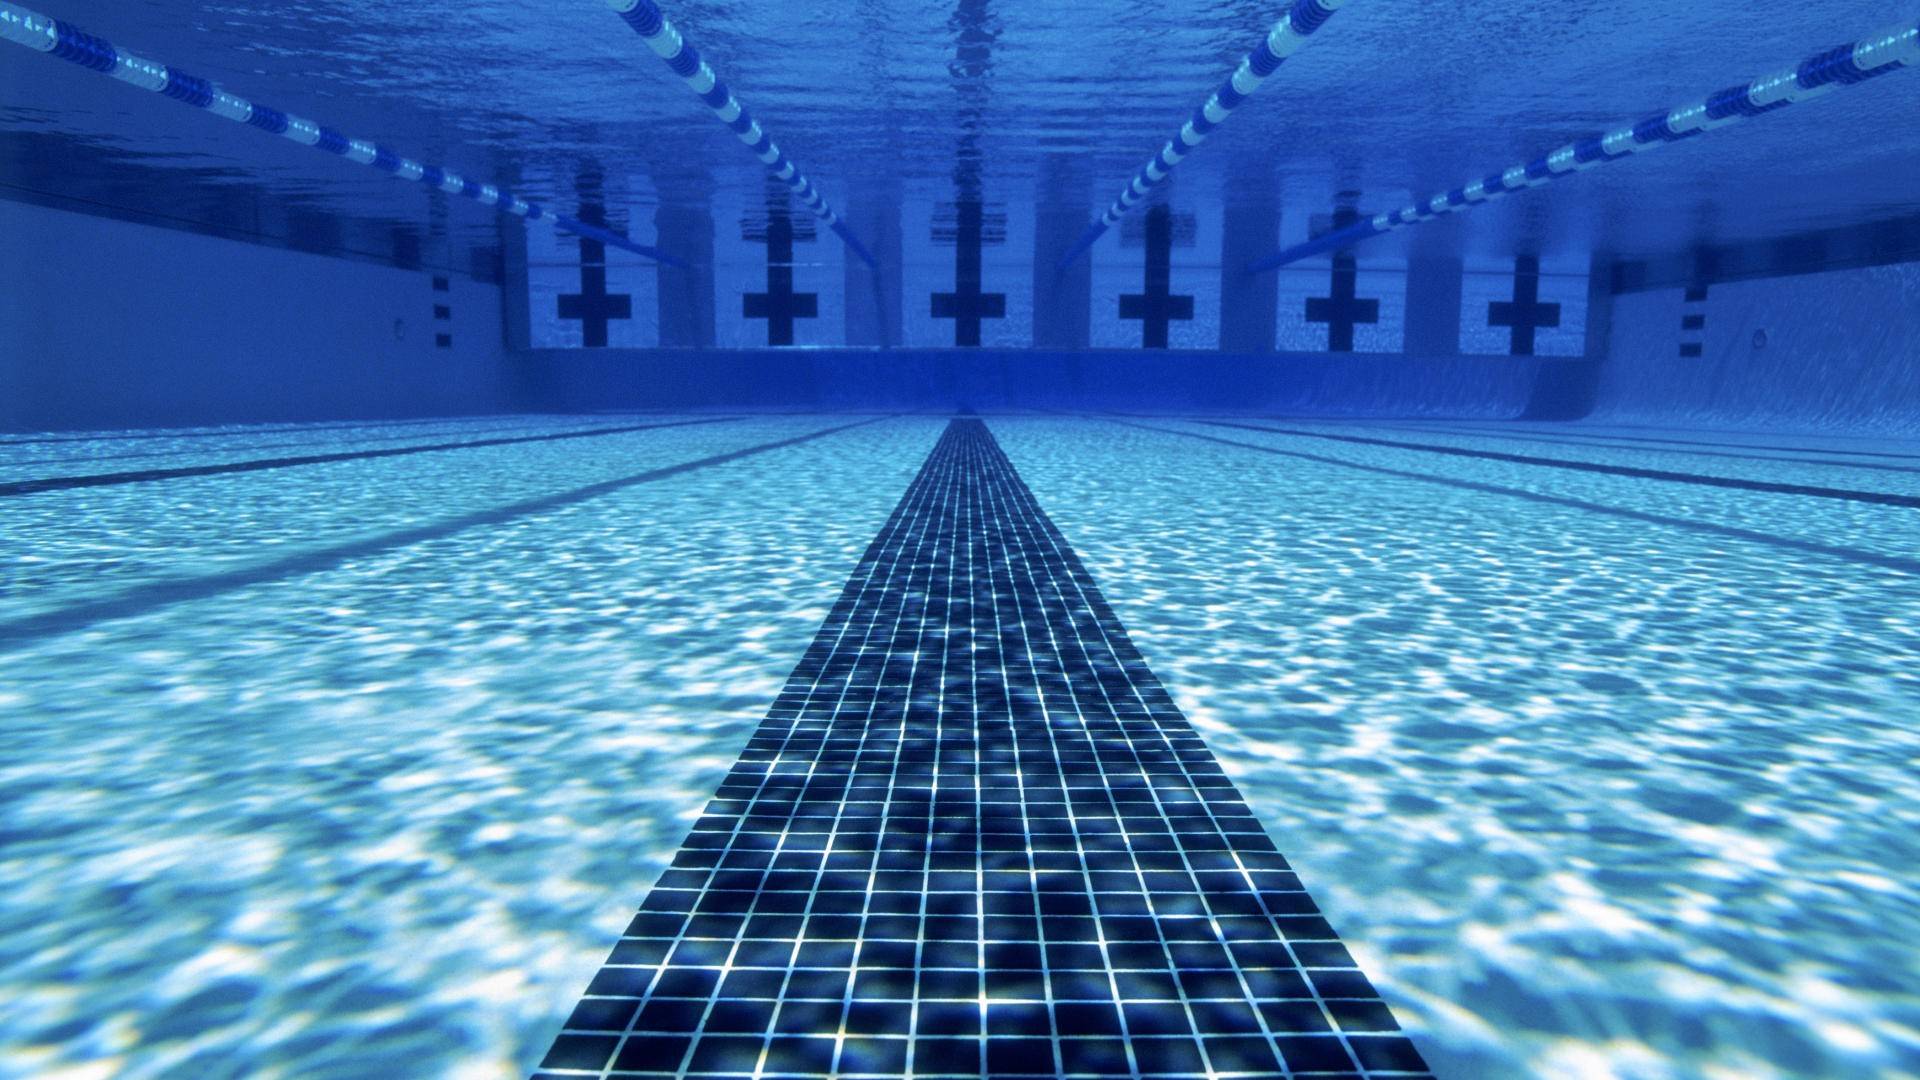 Creative Swimming Pools Wallpaper